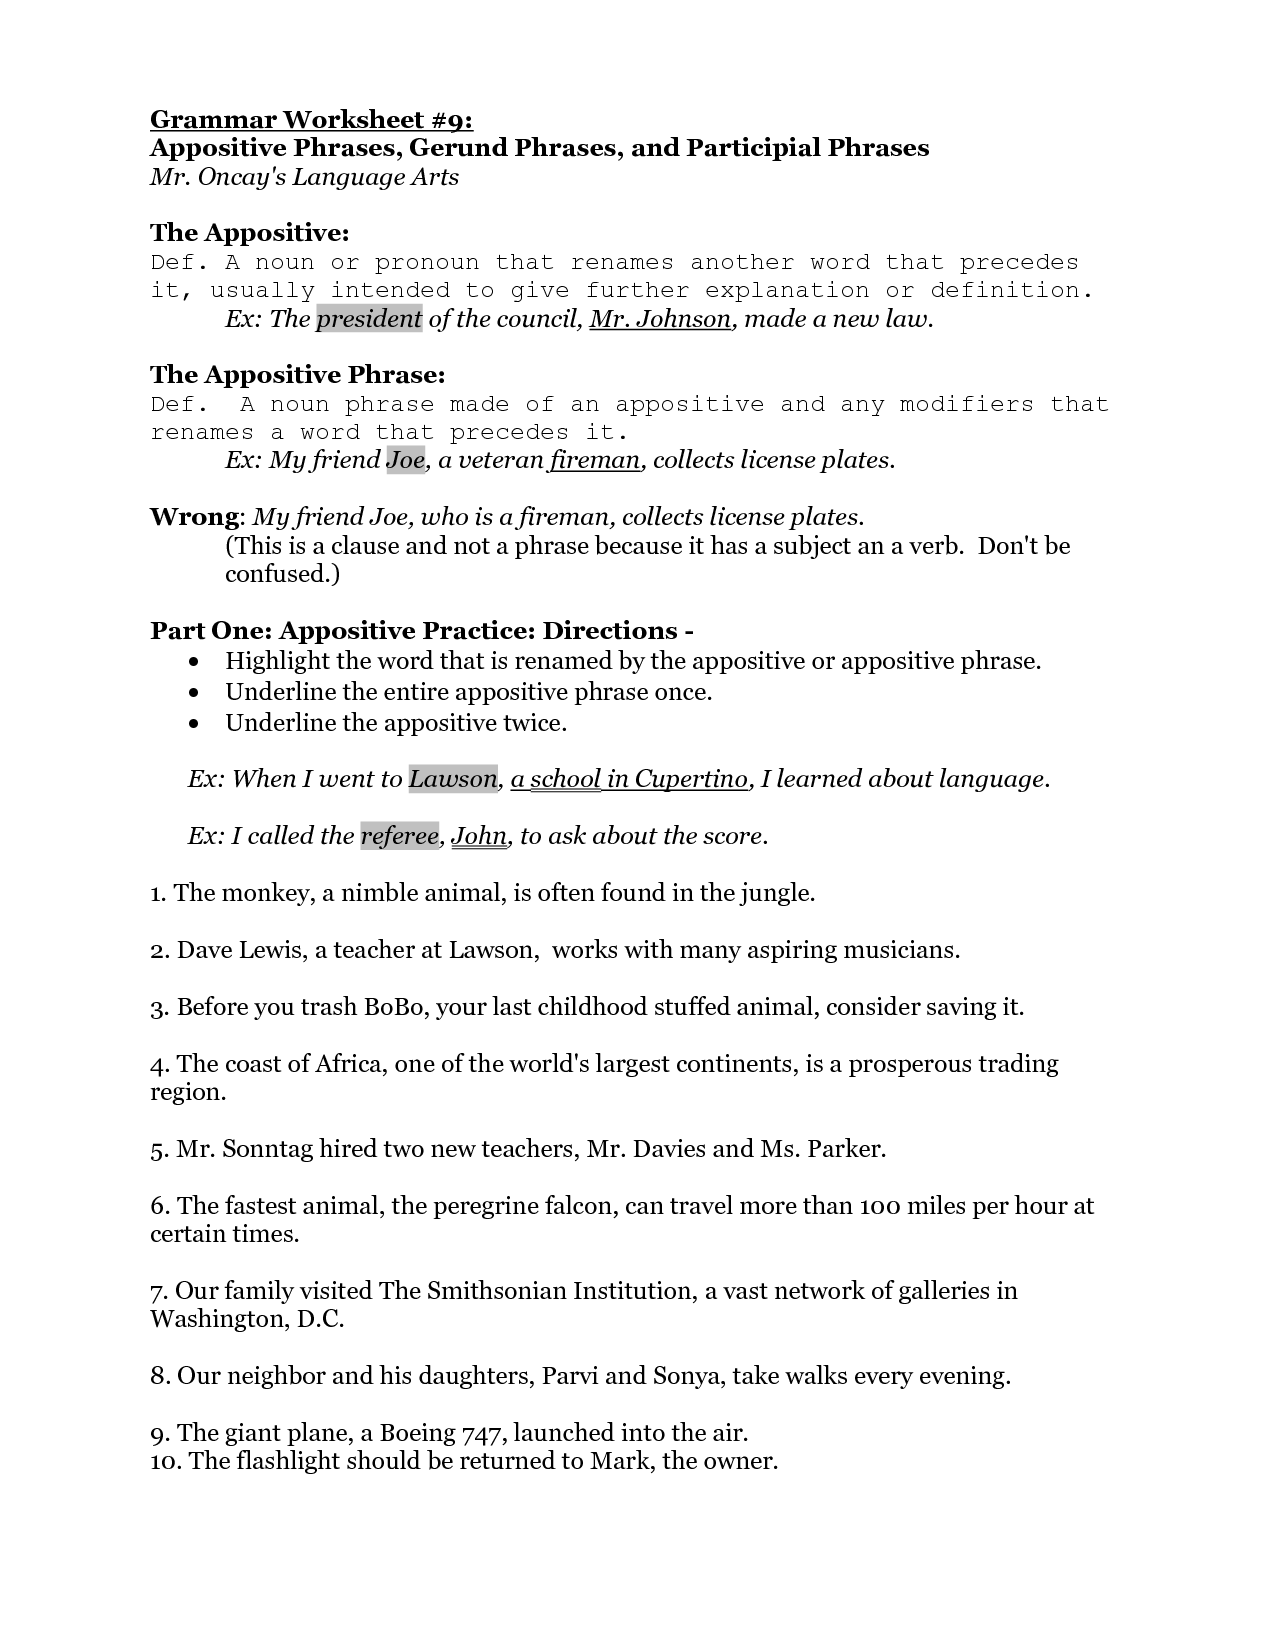 ed-ing-participles-esl-worksheet-by-bpksn